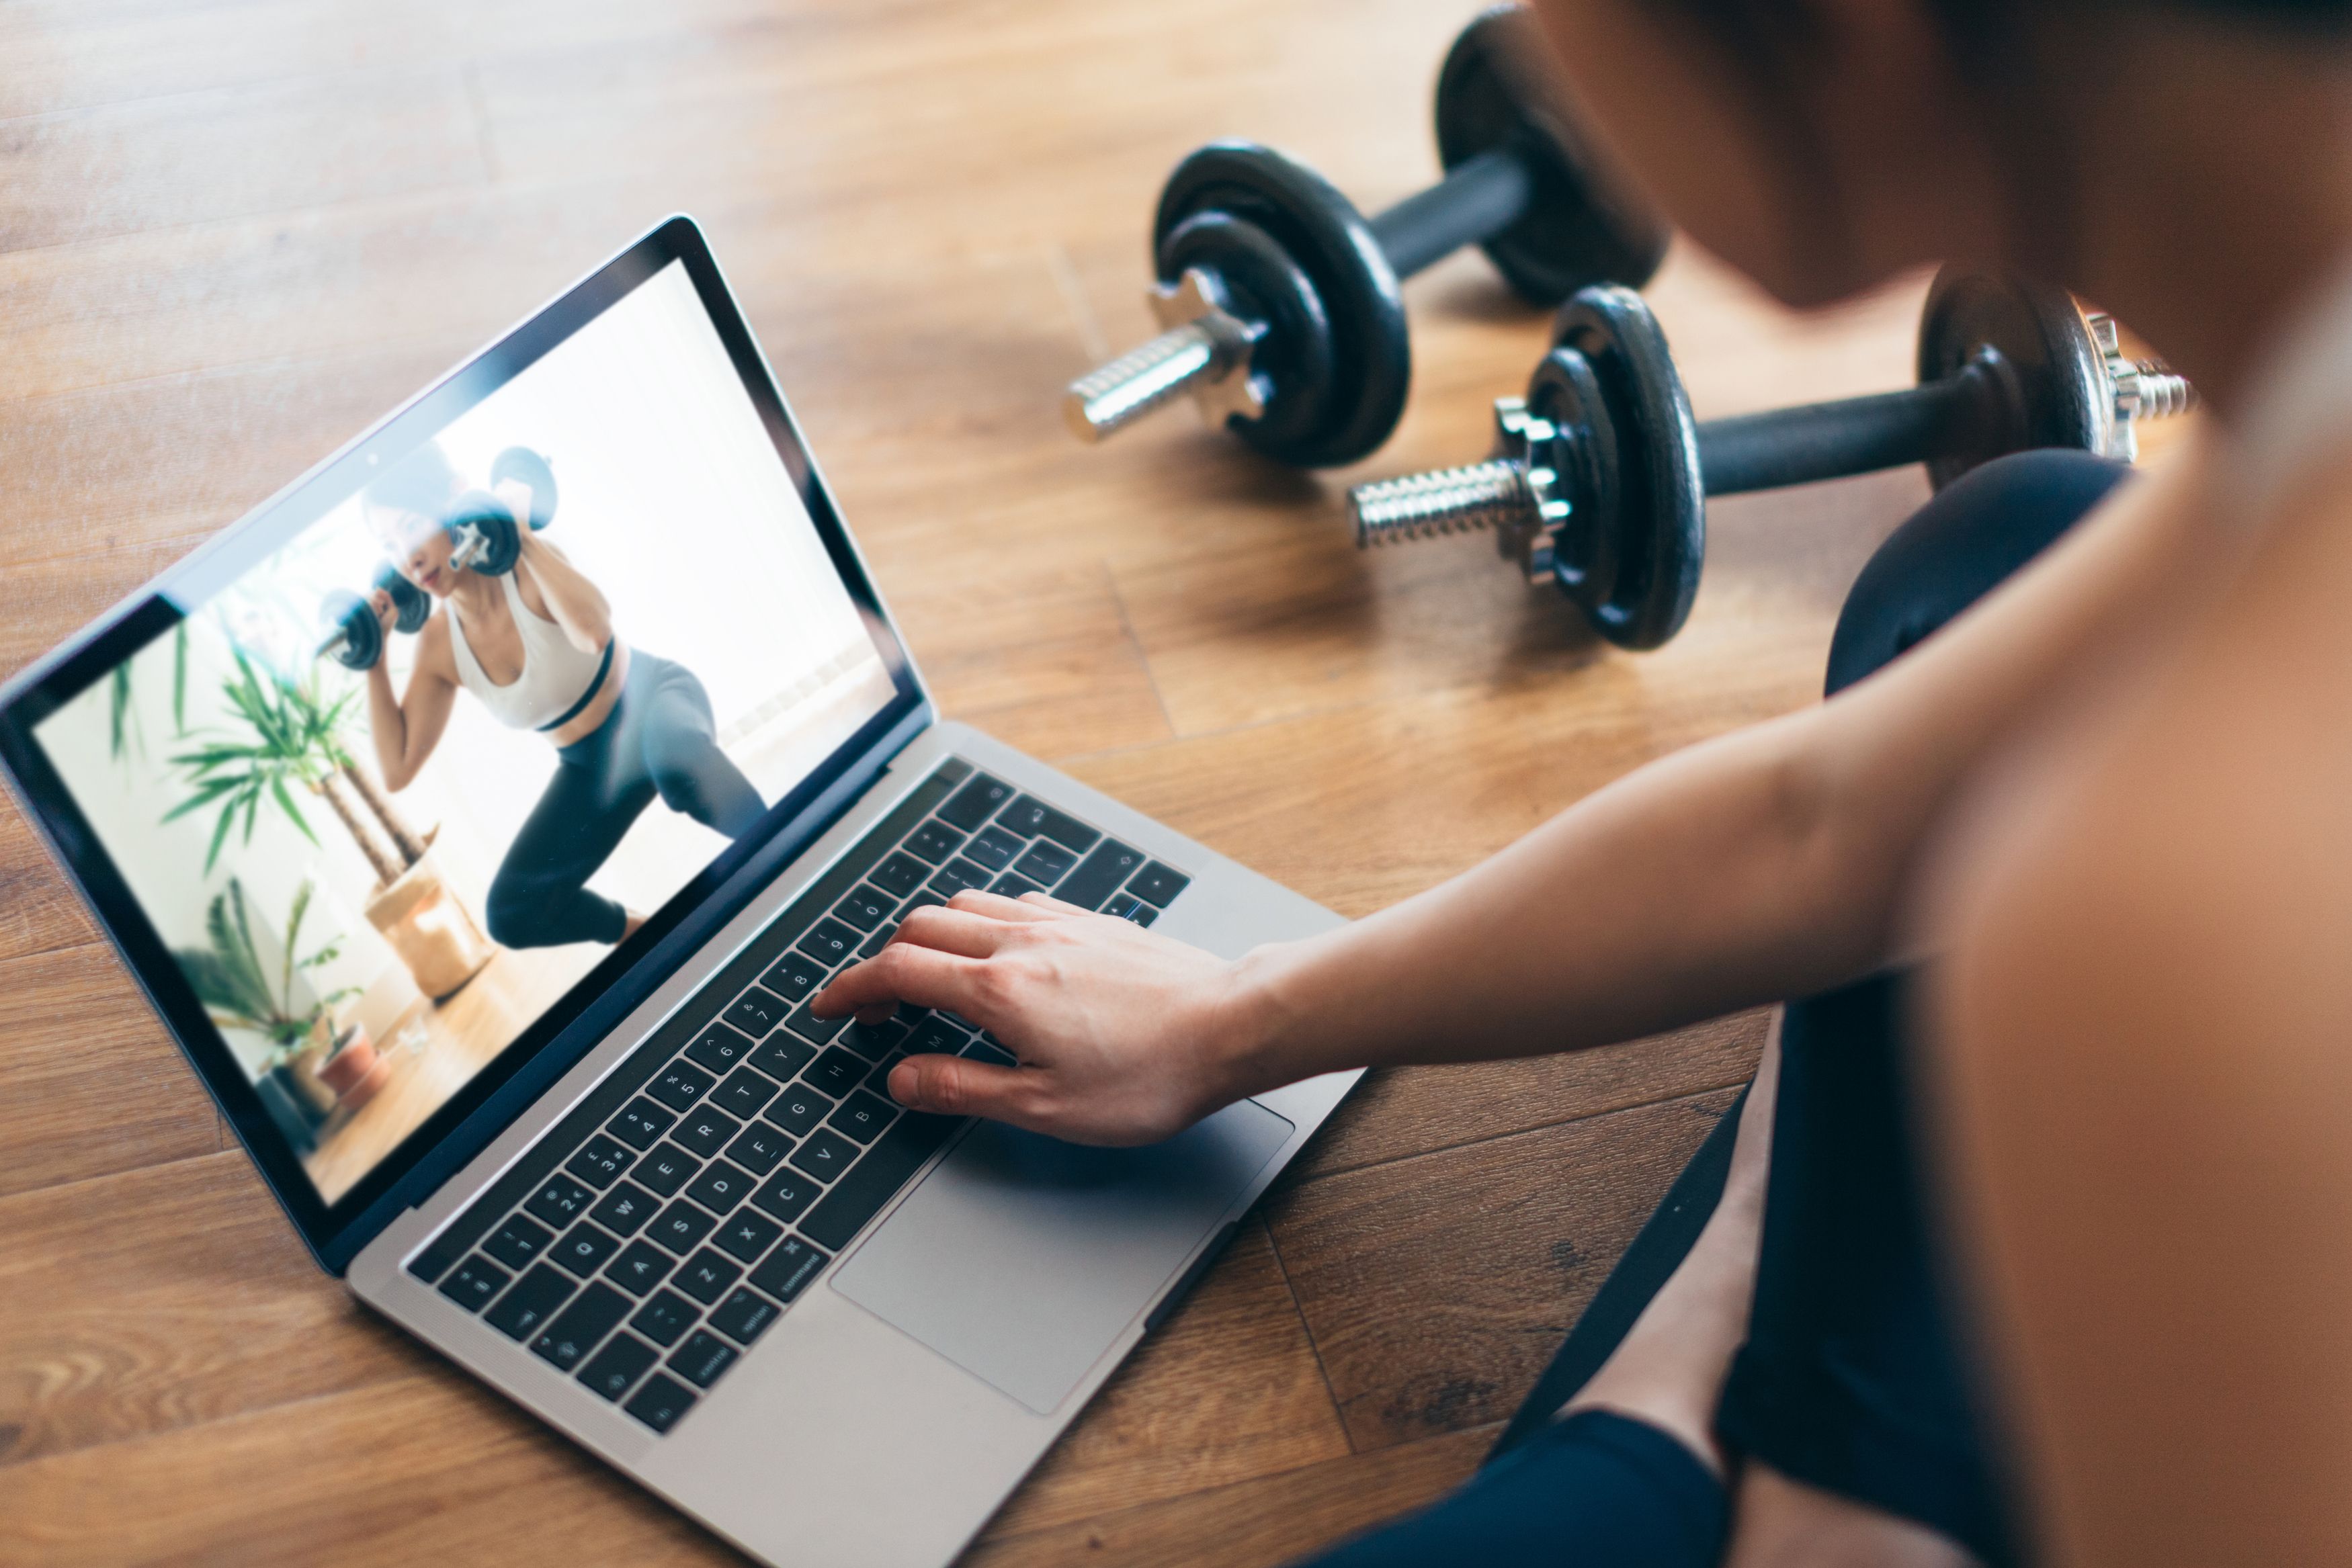 10 Best Online Workout Programs